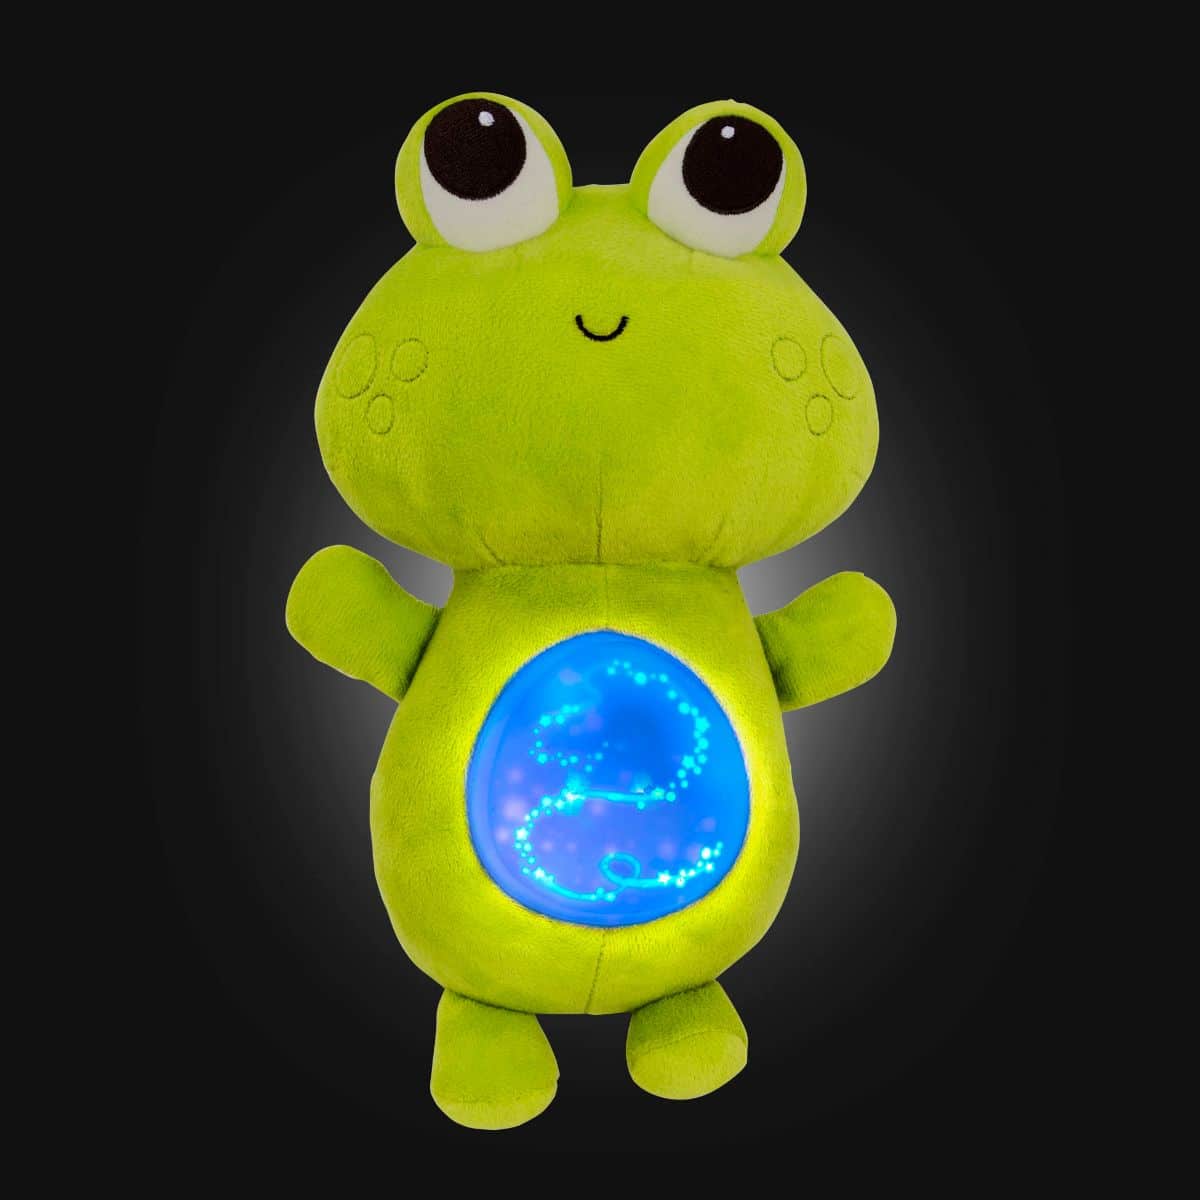 Light-up musical frog plushie